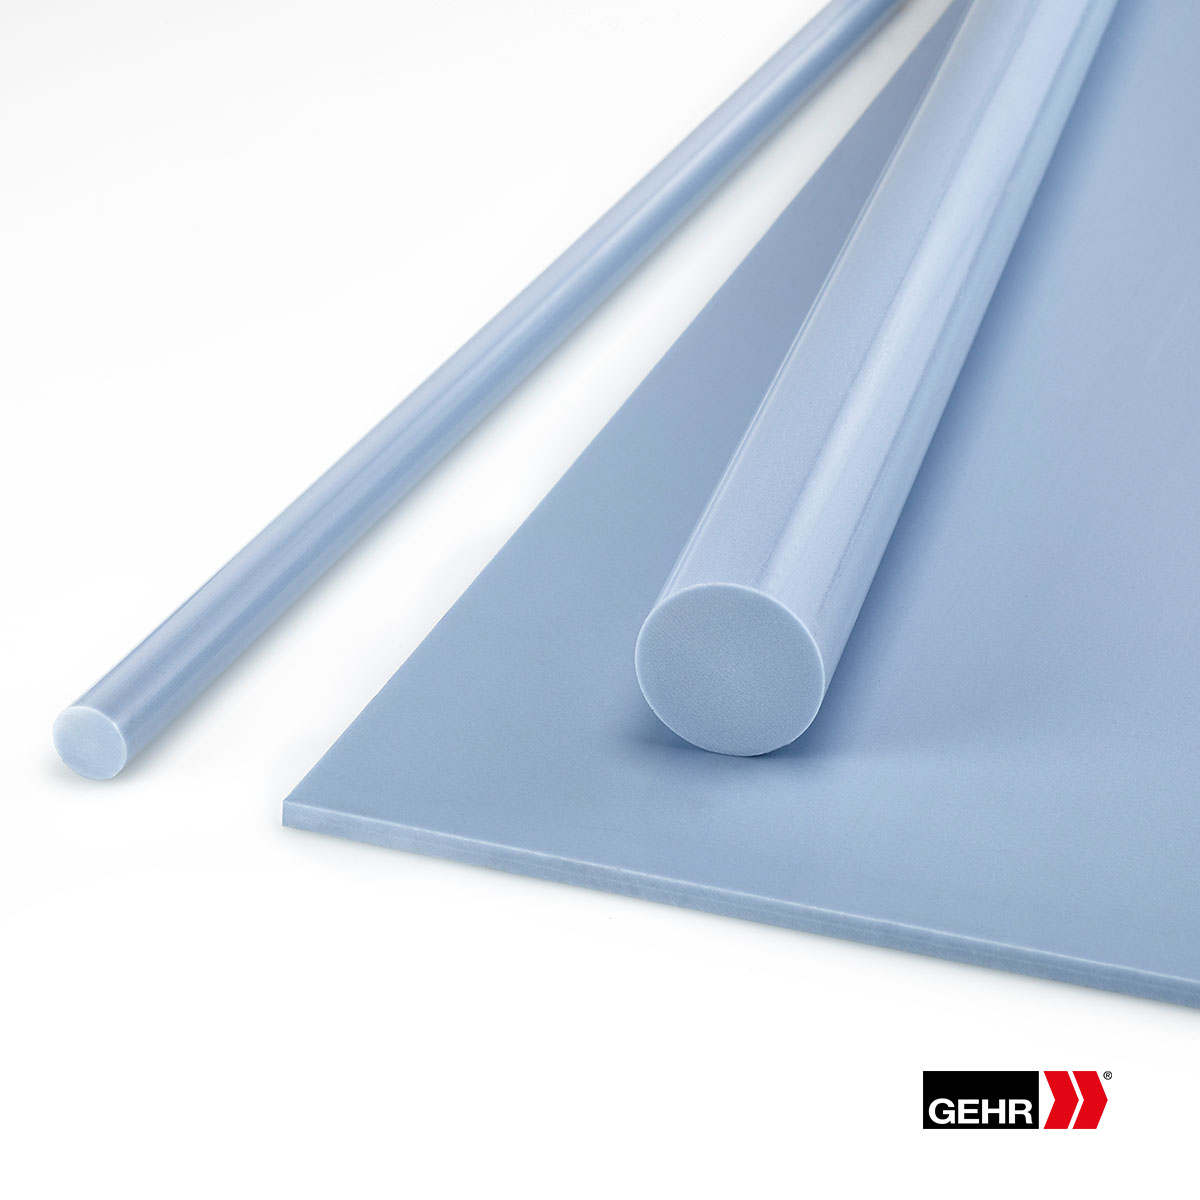 GLIDE-GEHR POM-10PE Sheets 1000 x 30 mm light blue